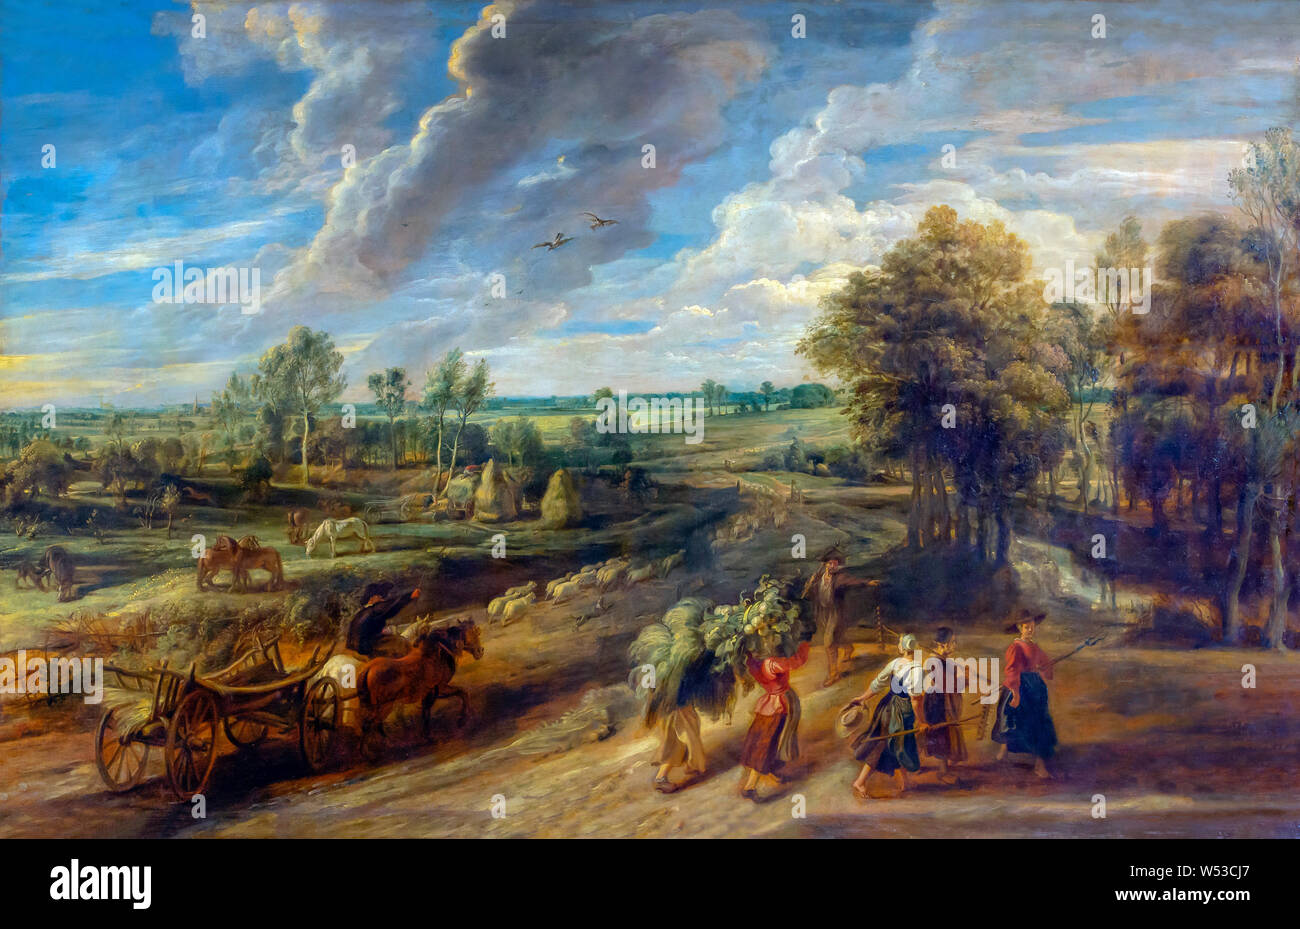 Retorno desde los campos, Peter Paul Rubens, circa 1640, Galería Palatina, Palacio Pitti, Florencia, Toscana, Italia, Europa Foto de stock